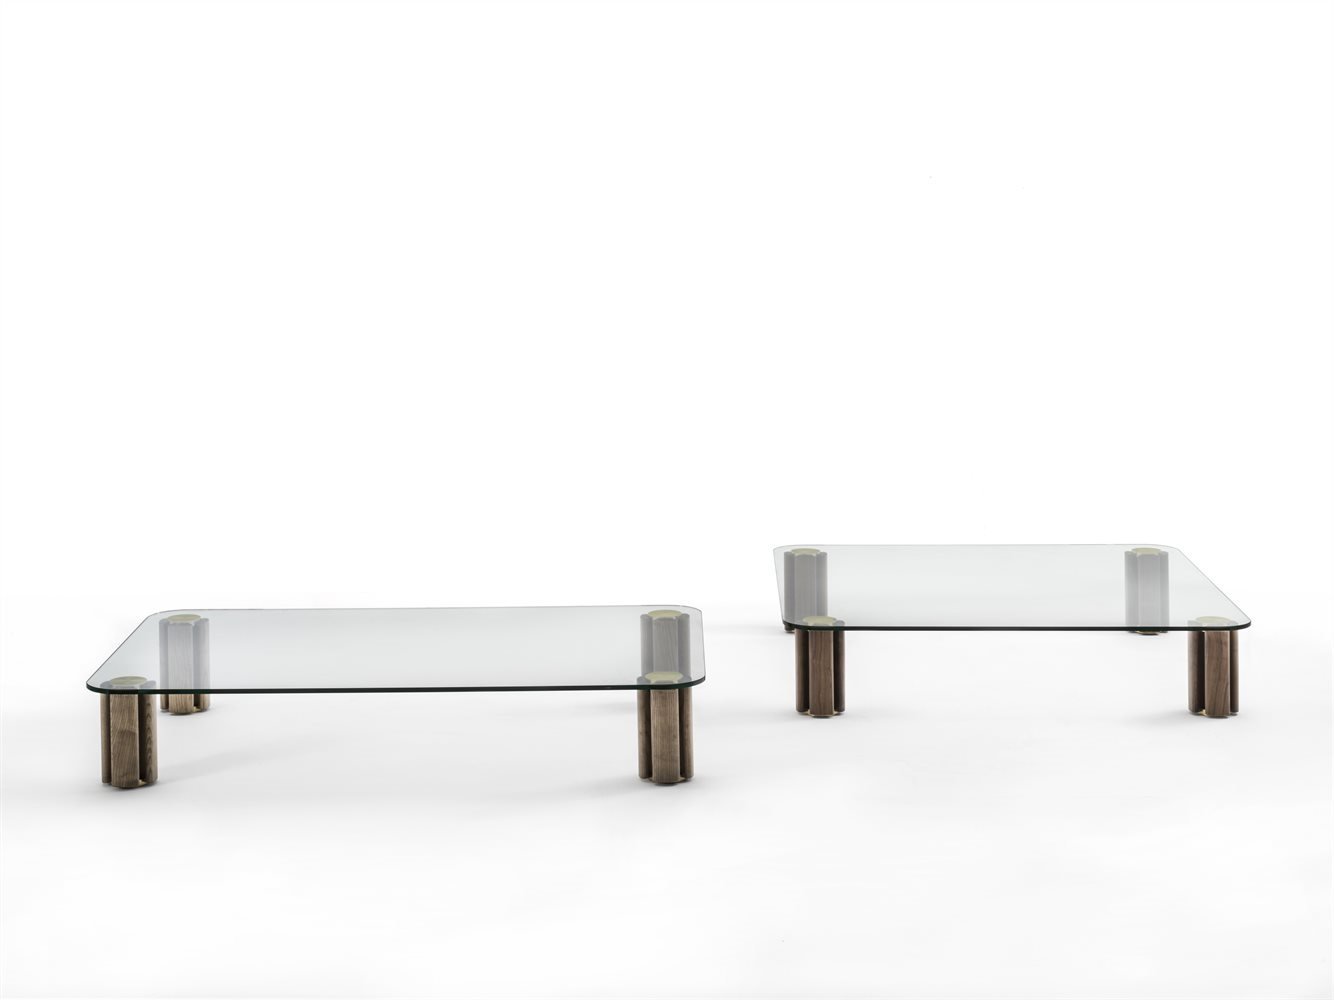 Quadrifoglio Tavolino coffee table from Porada, designed by C. Ballabio